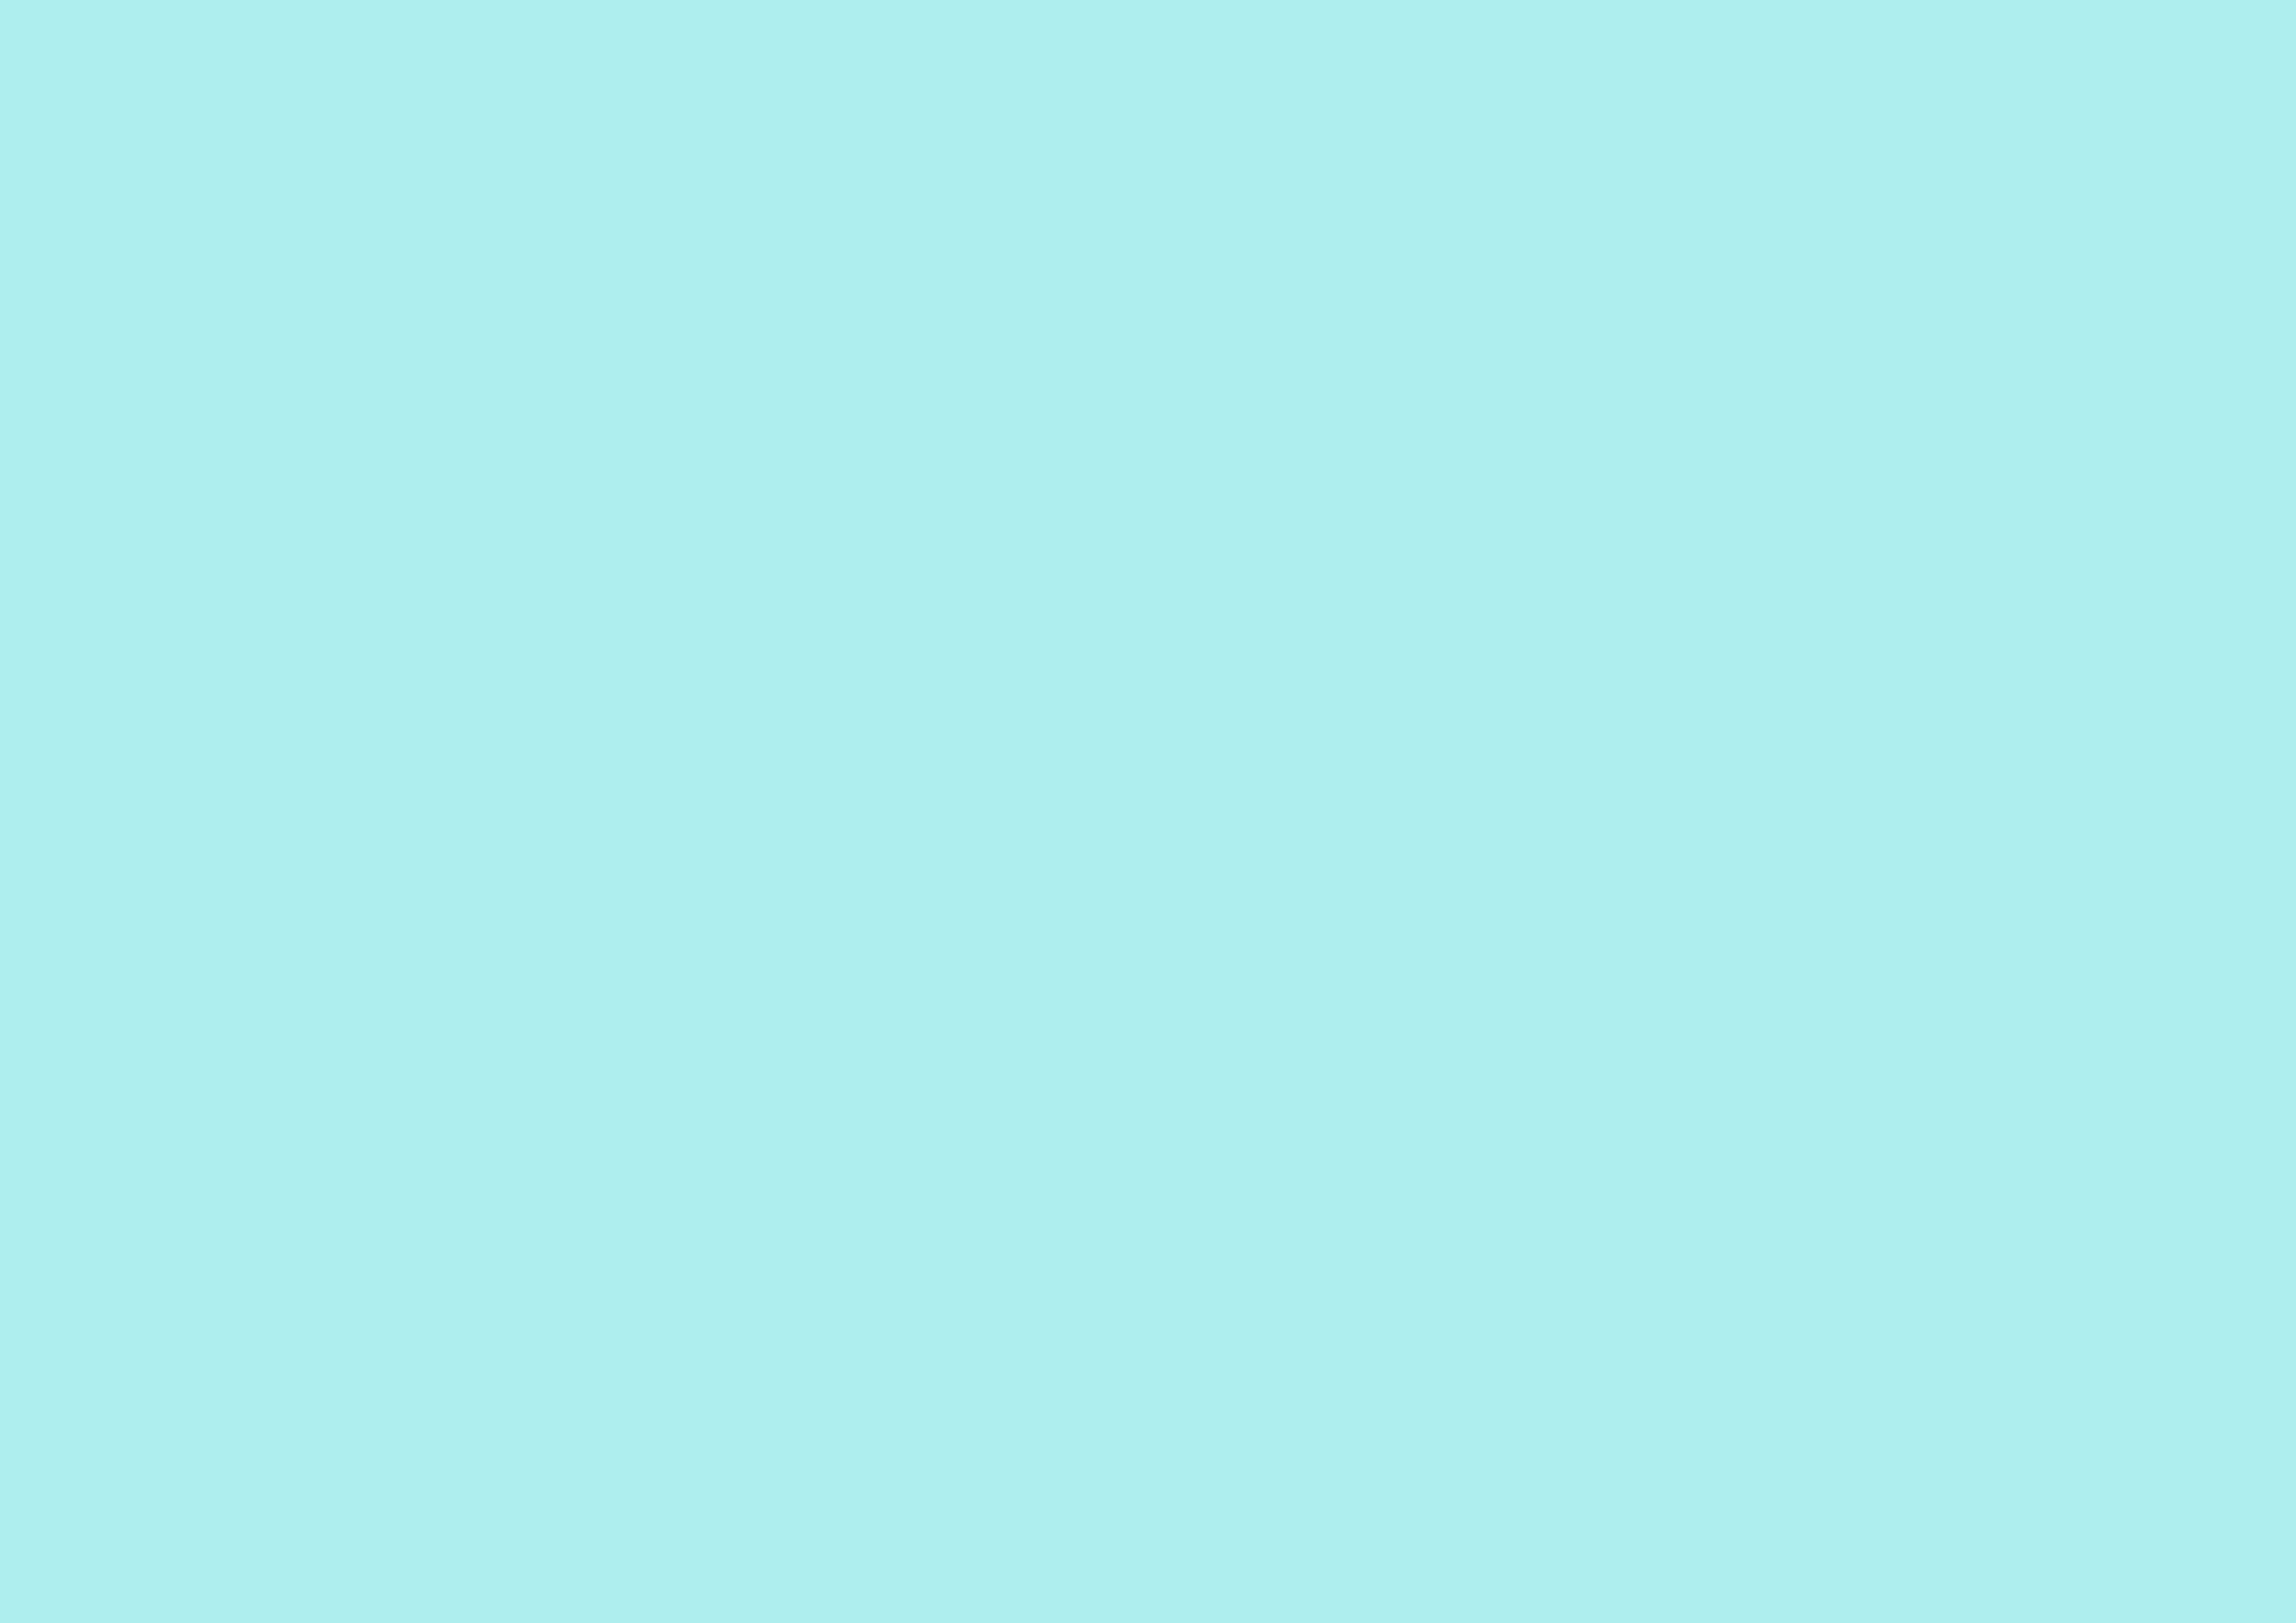 3508x2480 Pale Blue Solid Color Background